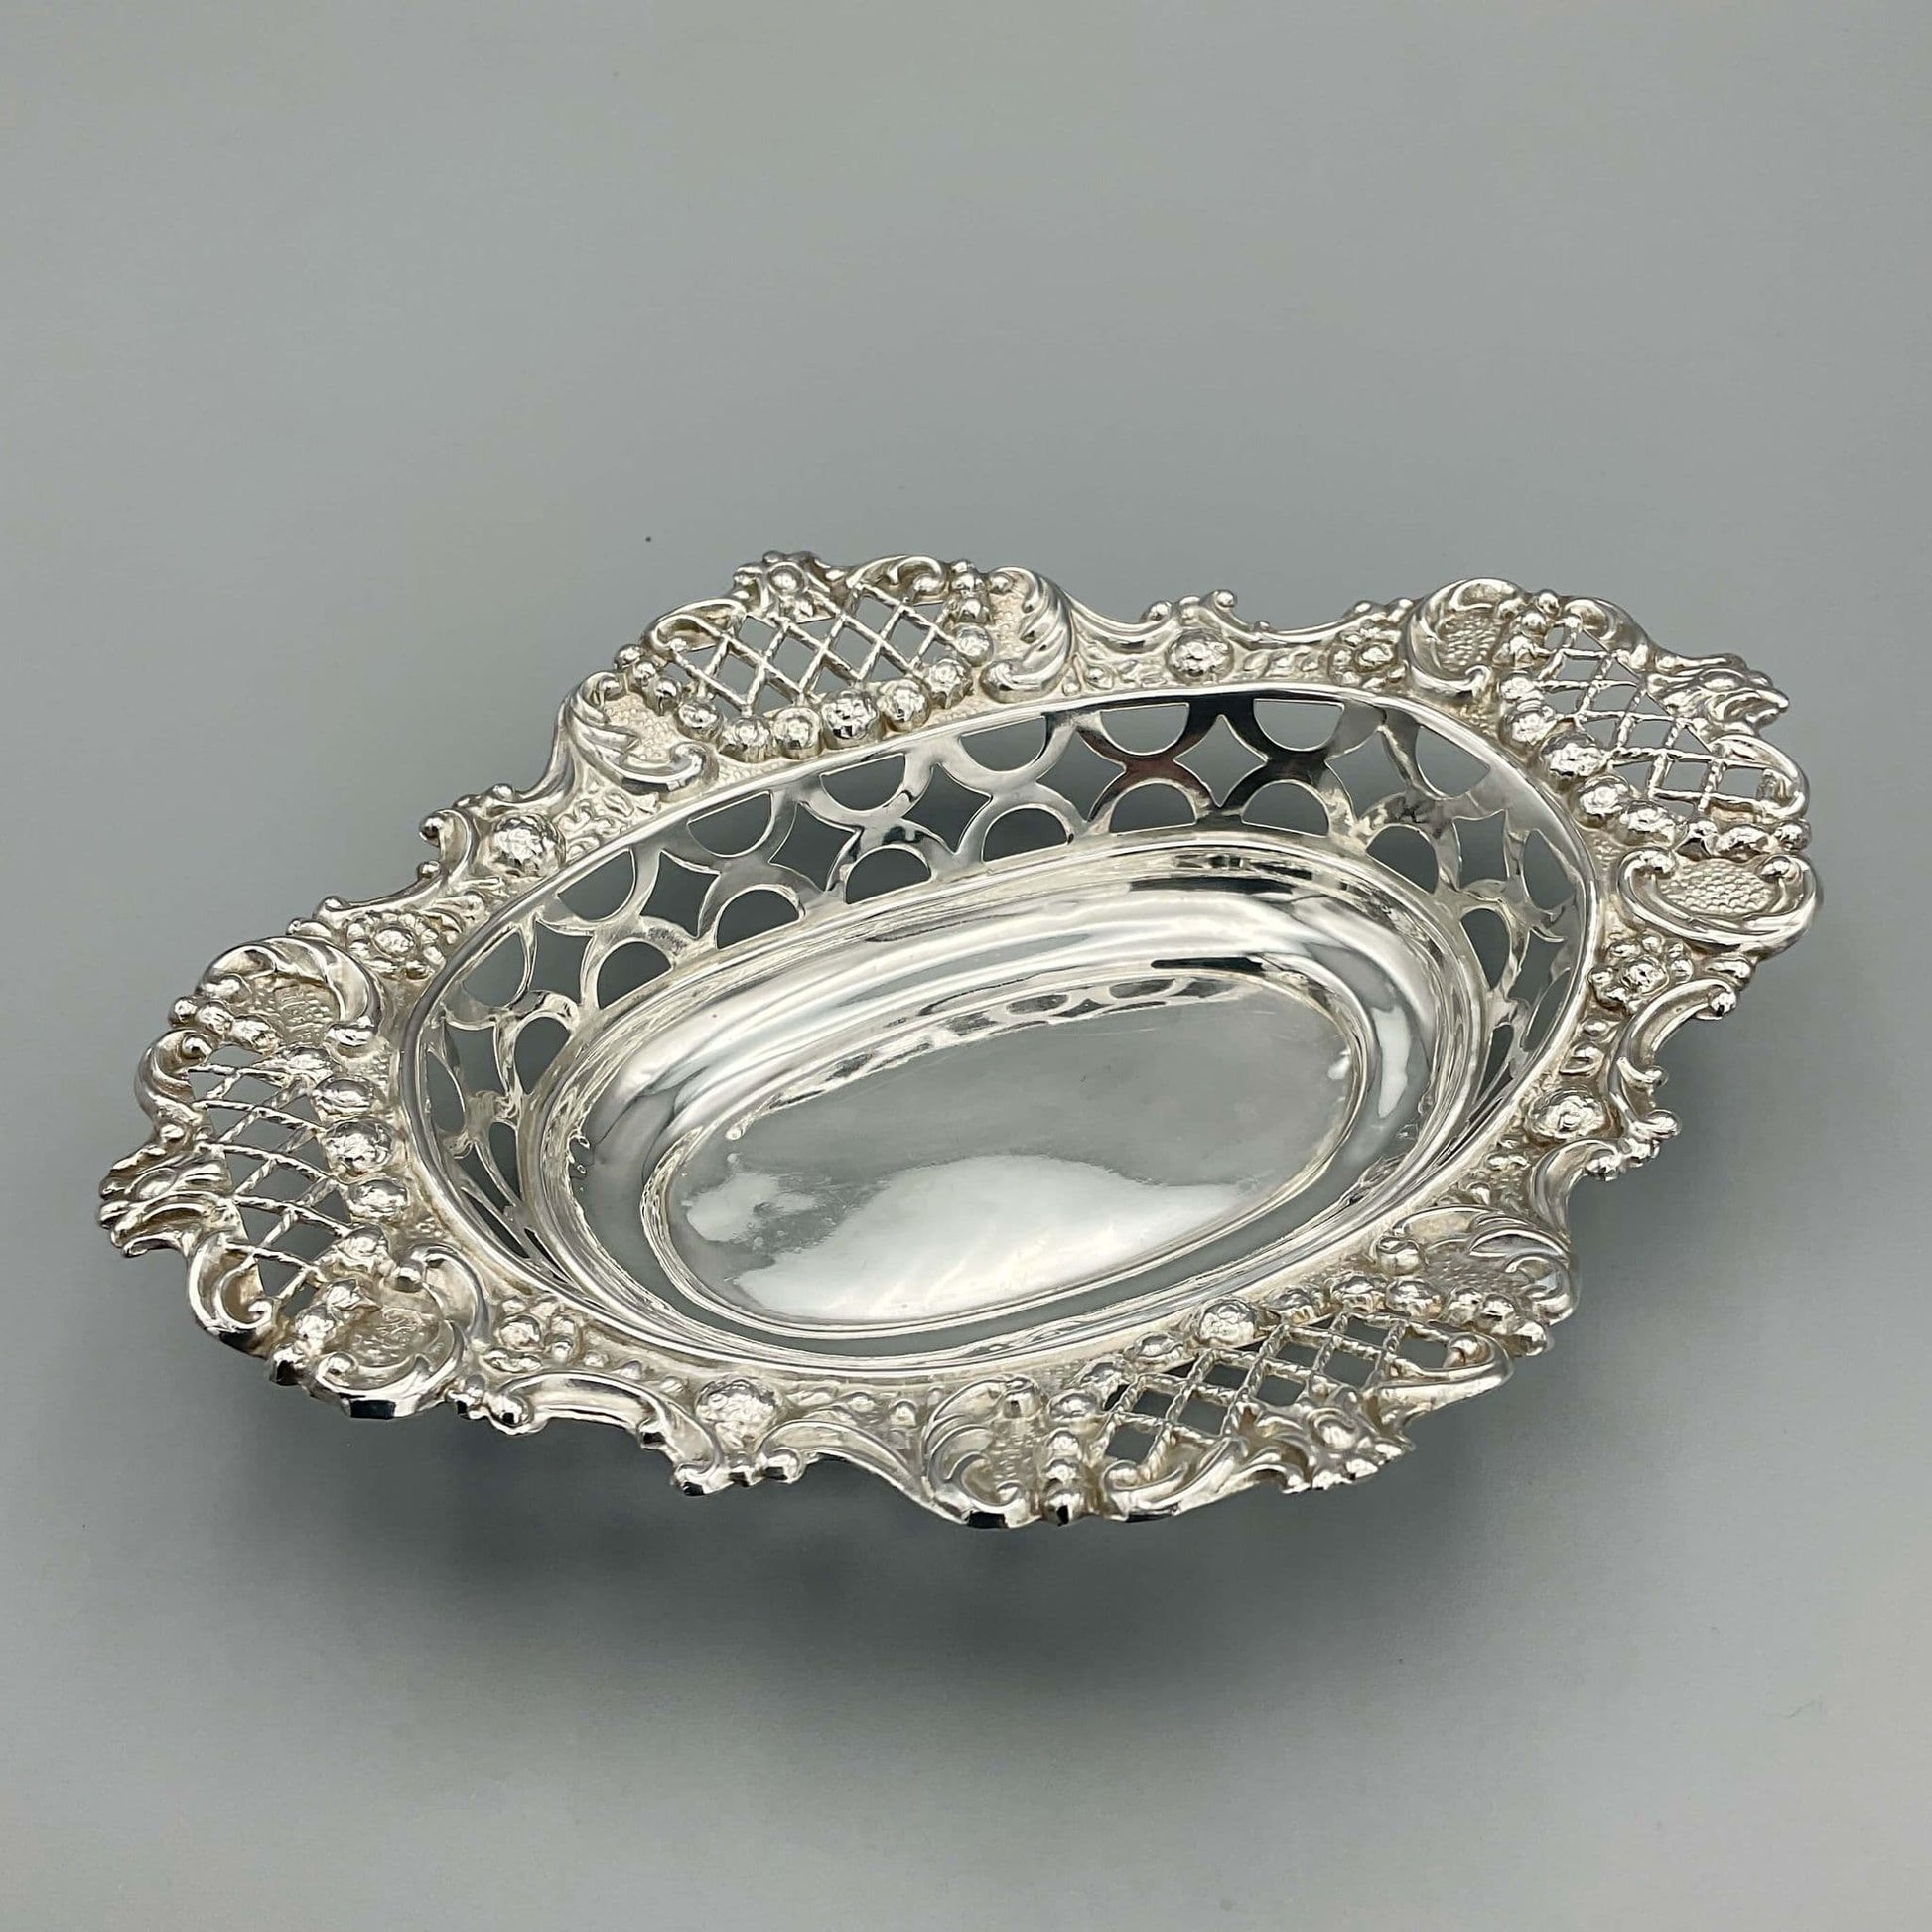 Ornate silver pierced bowl on grey background 